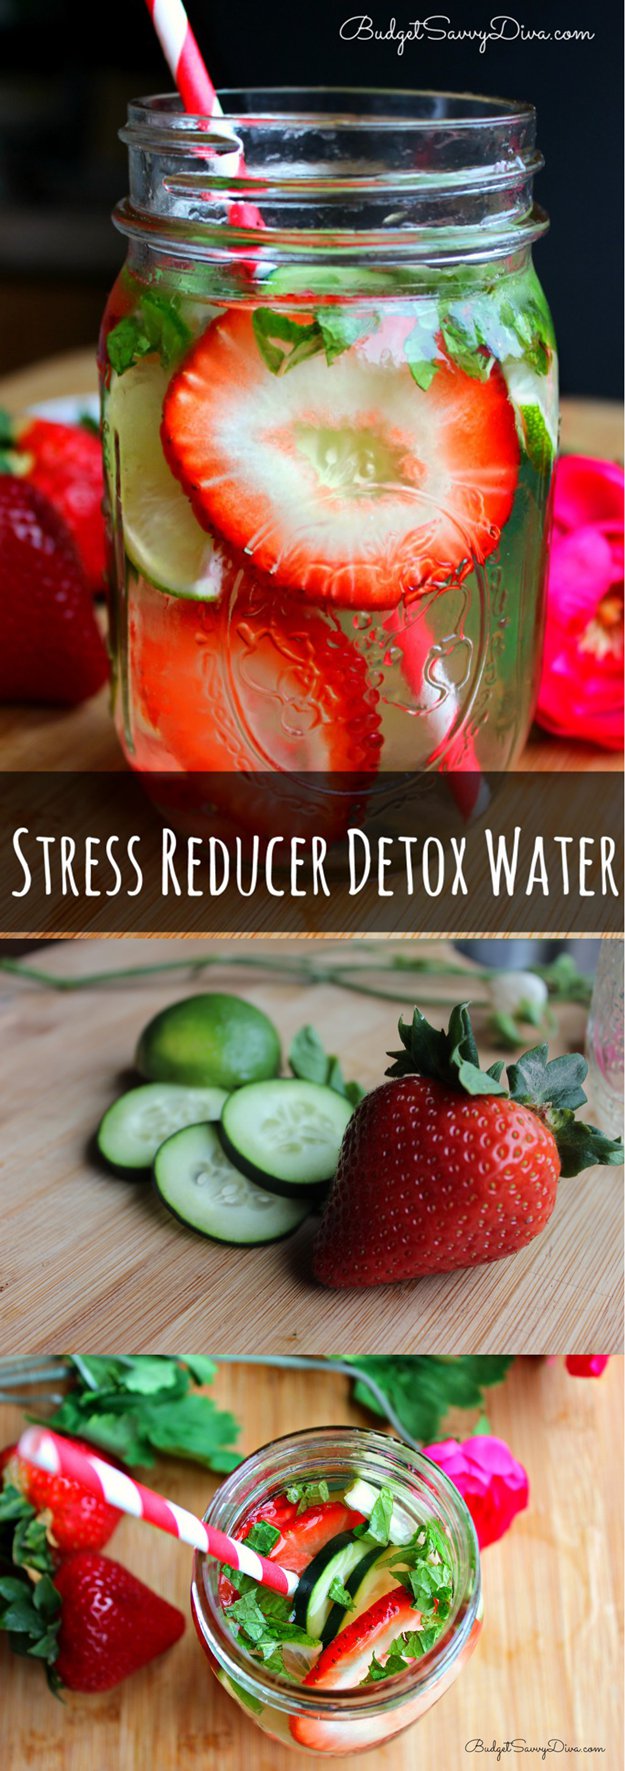 Easy Healthy Detox Water Recipe | http://diyready.com/diy-recipes-detox-waters/